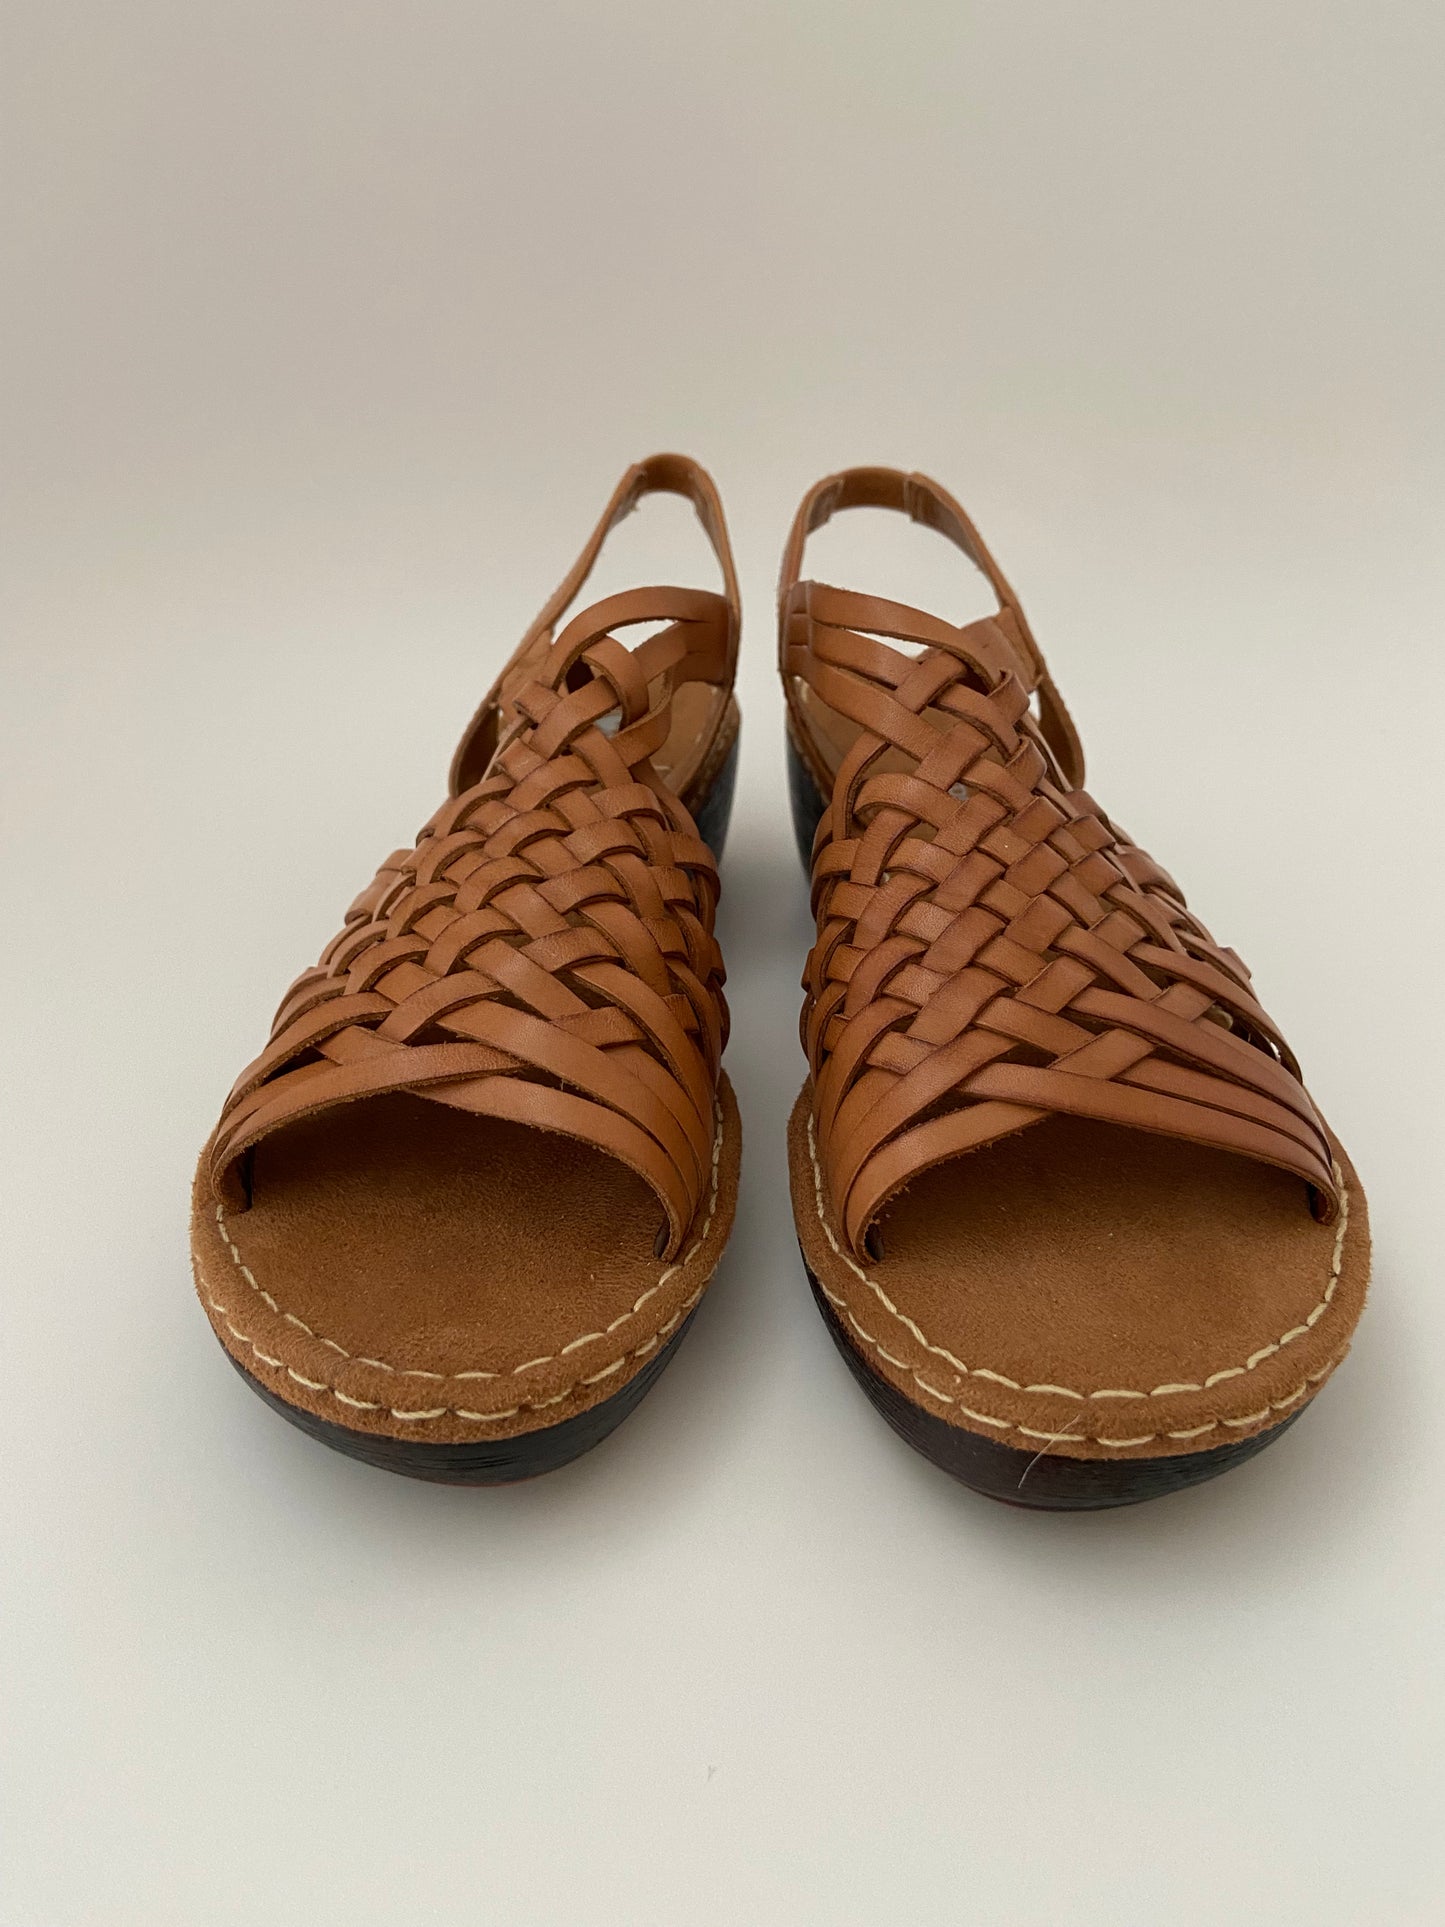 Weave Strap Sandals